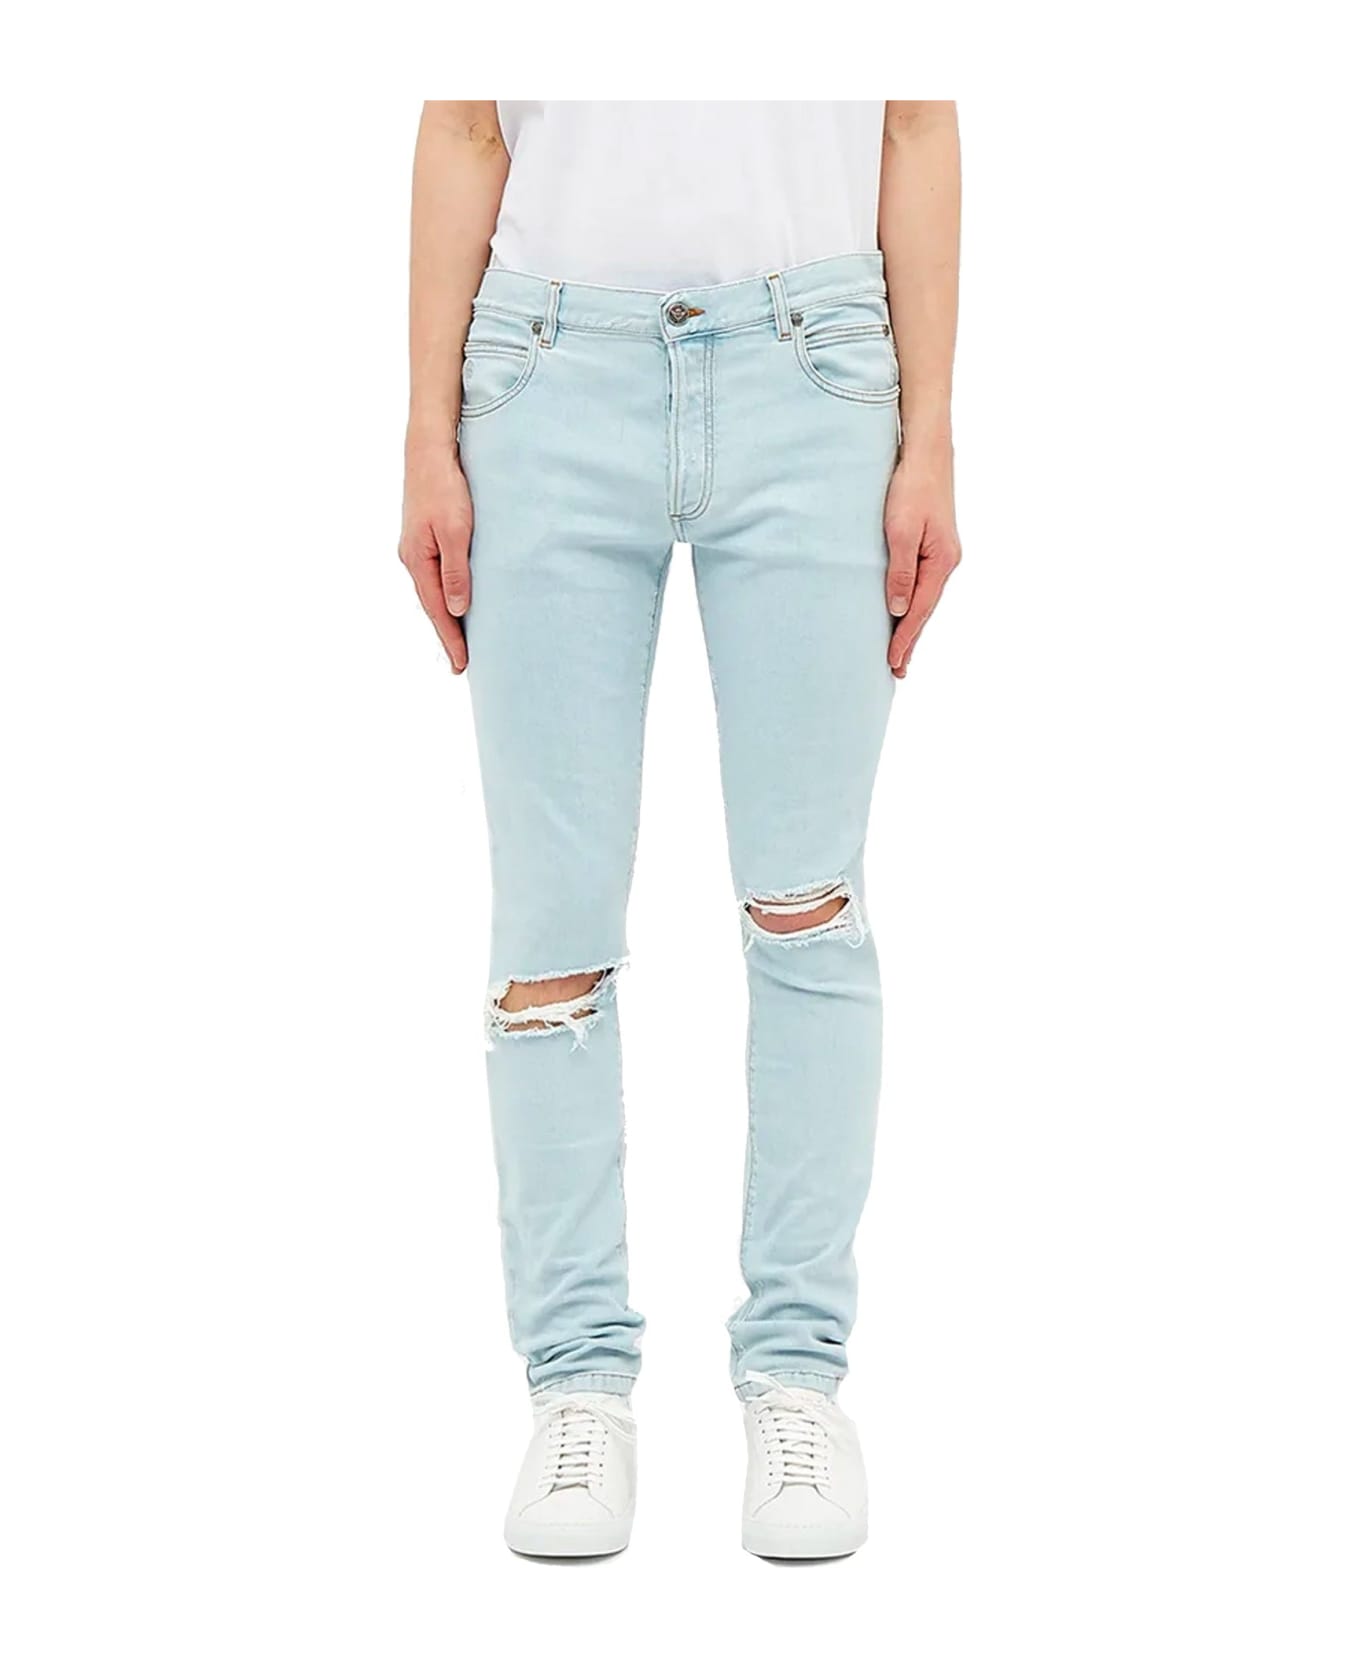 Balmain Distressed Skinny Jeans - Blue